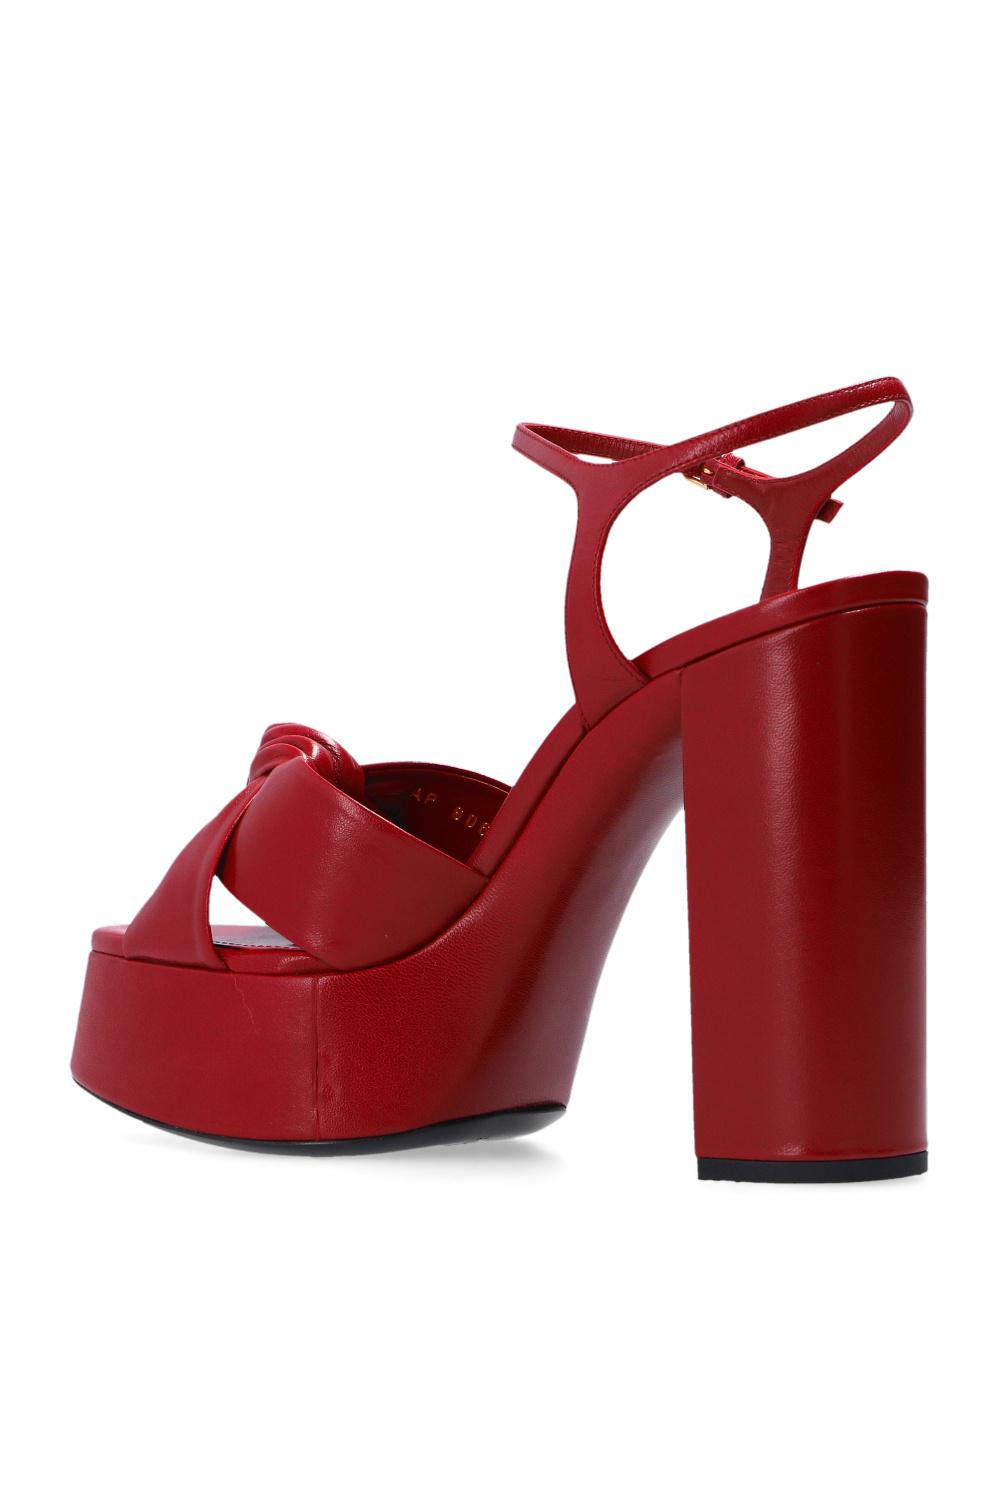 Saint Laurent Leather 'bianca' Platform Sandals in Burgundy (Red) - Lyst